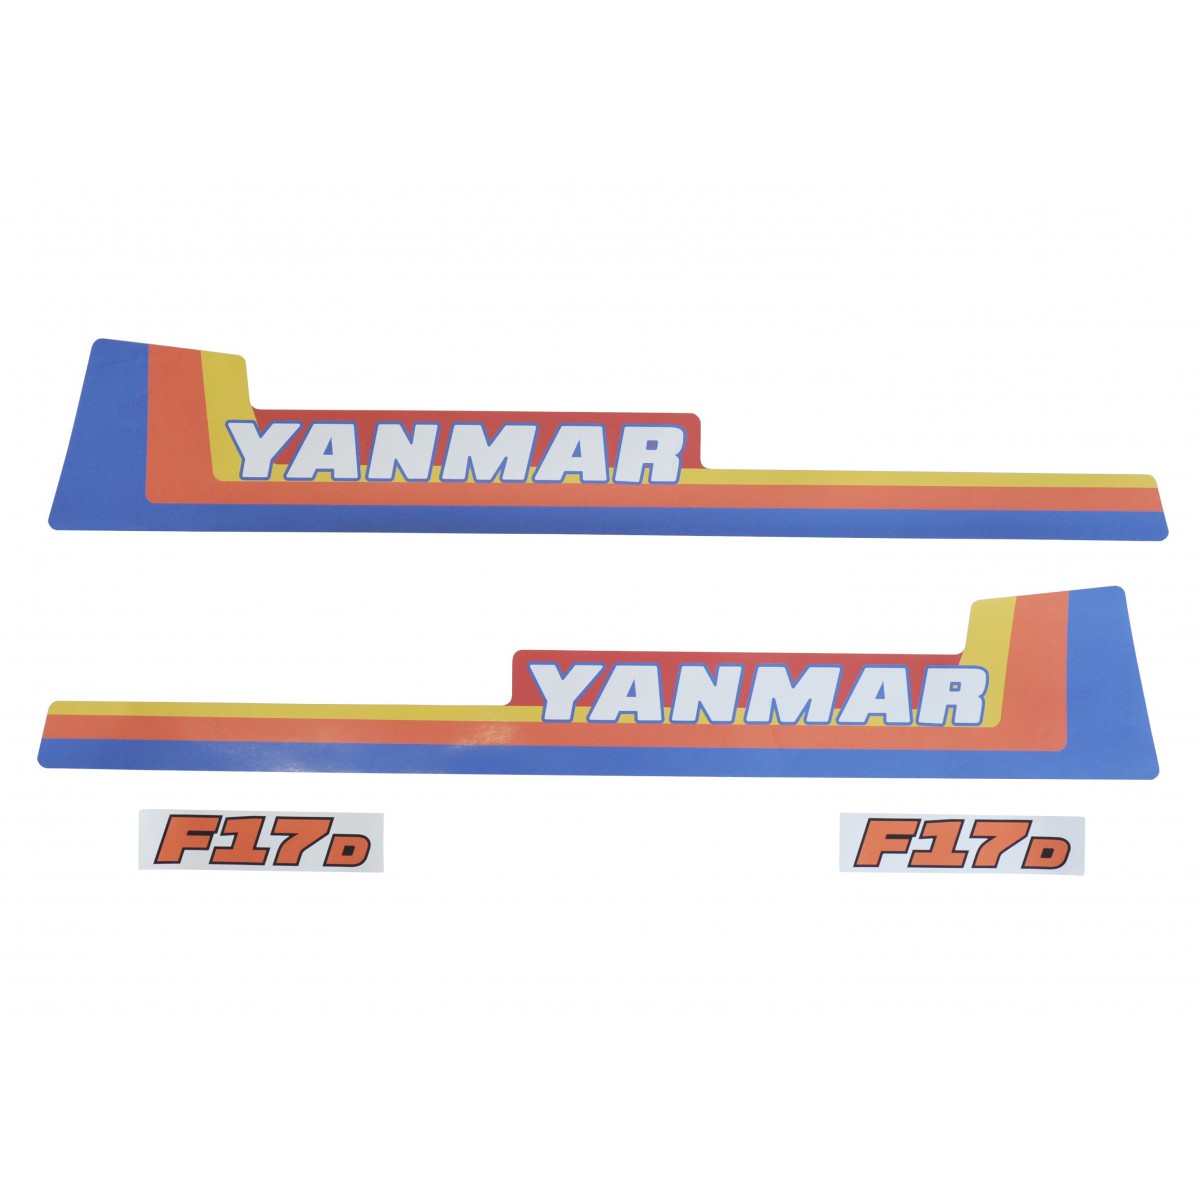 Autocollants Yanmar F17D